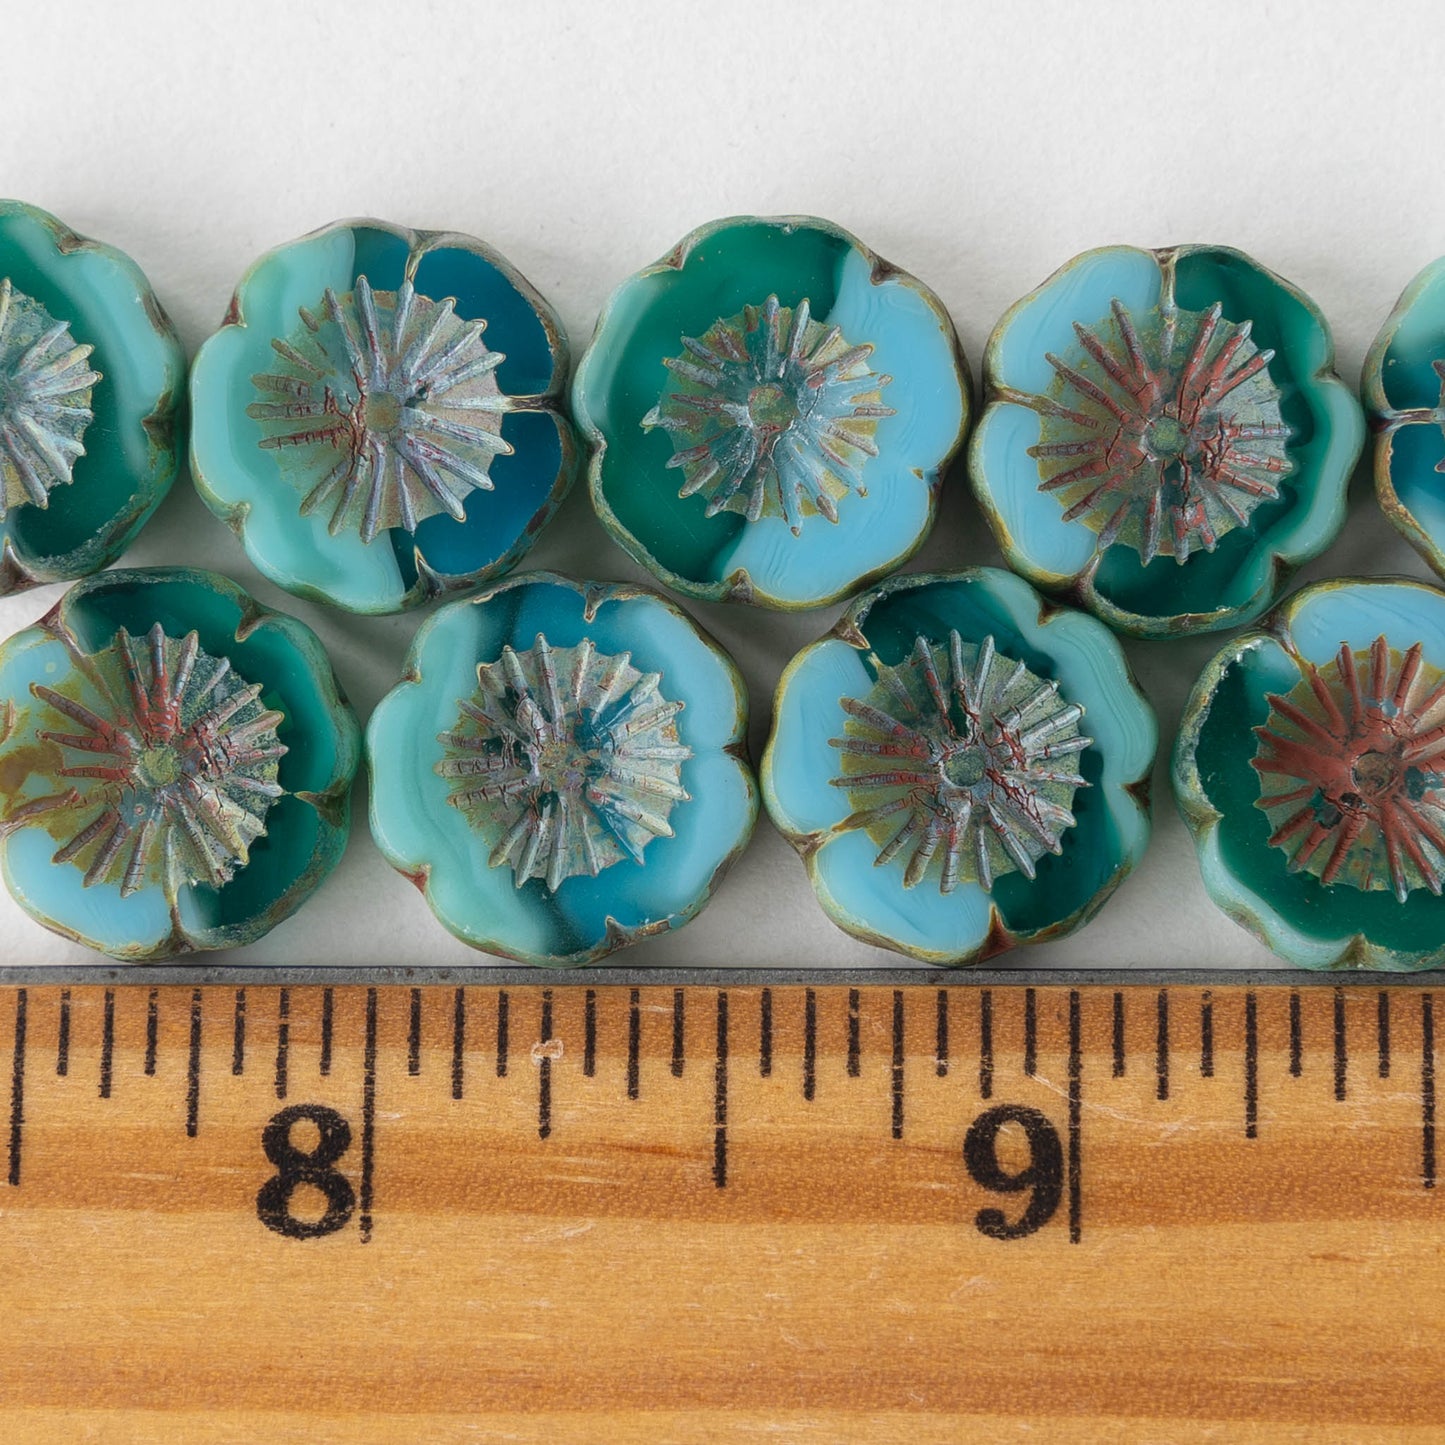 14mm Hibiscus Flower Beads - Transparent Aqua Teal Mix - 10 Beads